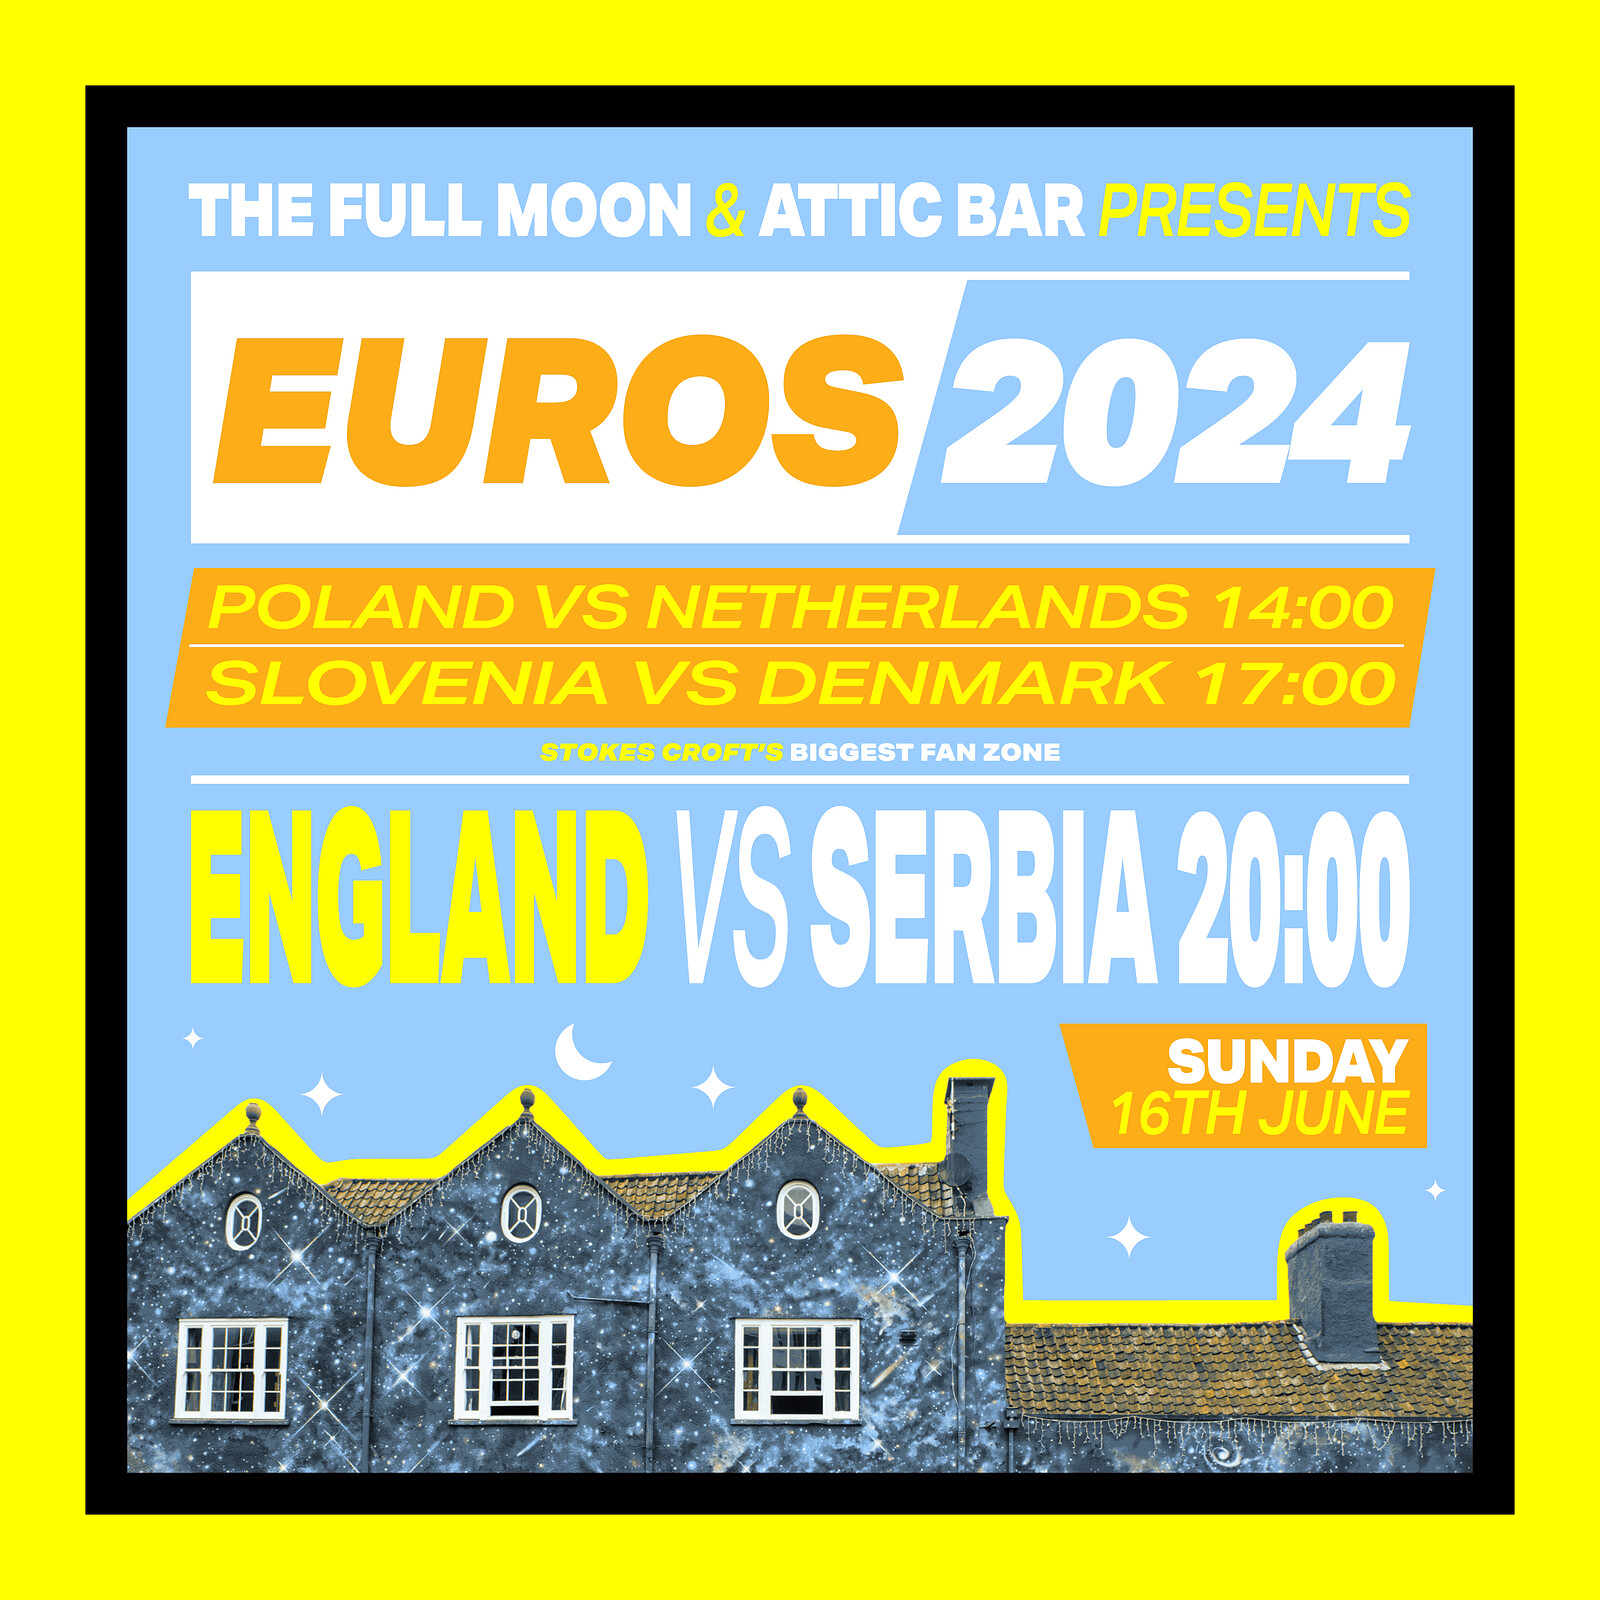 EUROS 2024: England vs Serbia 8pm KO at The Full Moon & Attic Bar